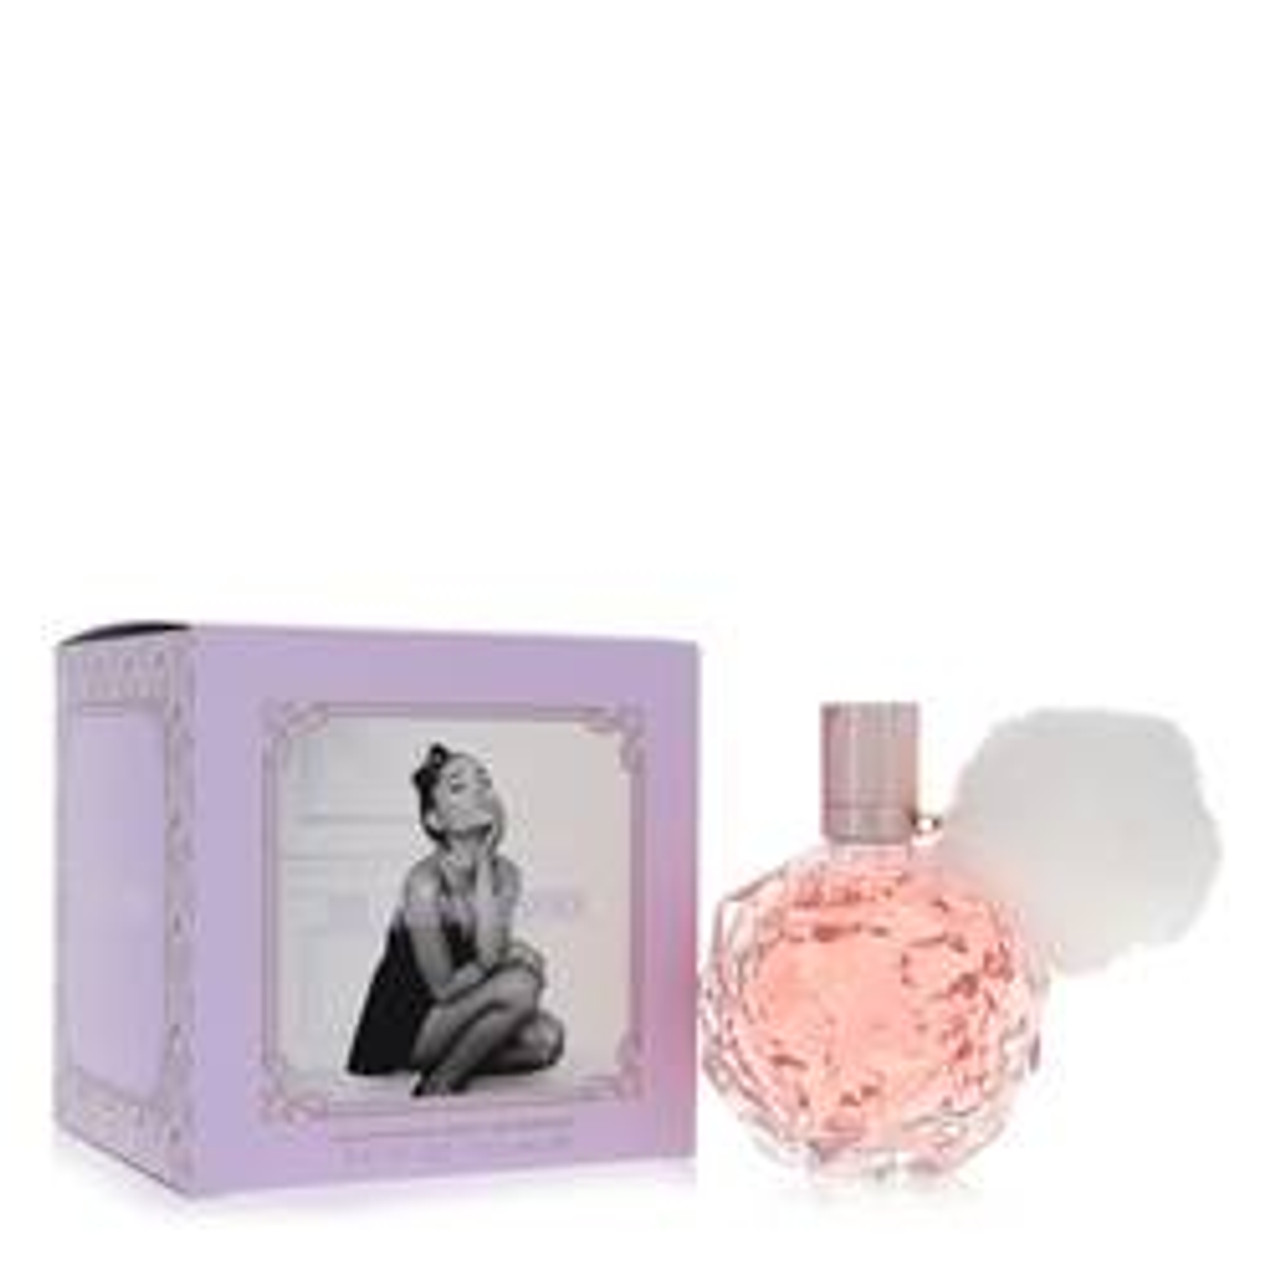 Ari Perfume By Ariana Grande Eau De Parfum Spray 3.4 oz for Women - [From 128.00 - Choose pk Qty ] - *Ships from Miami